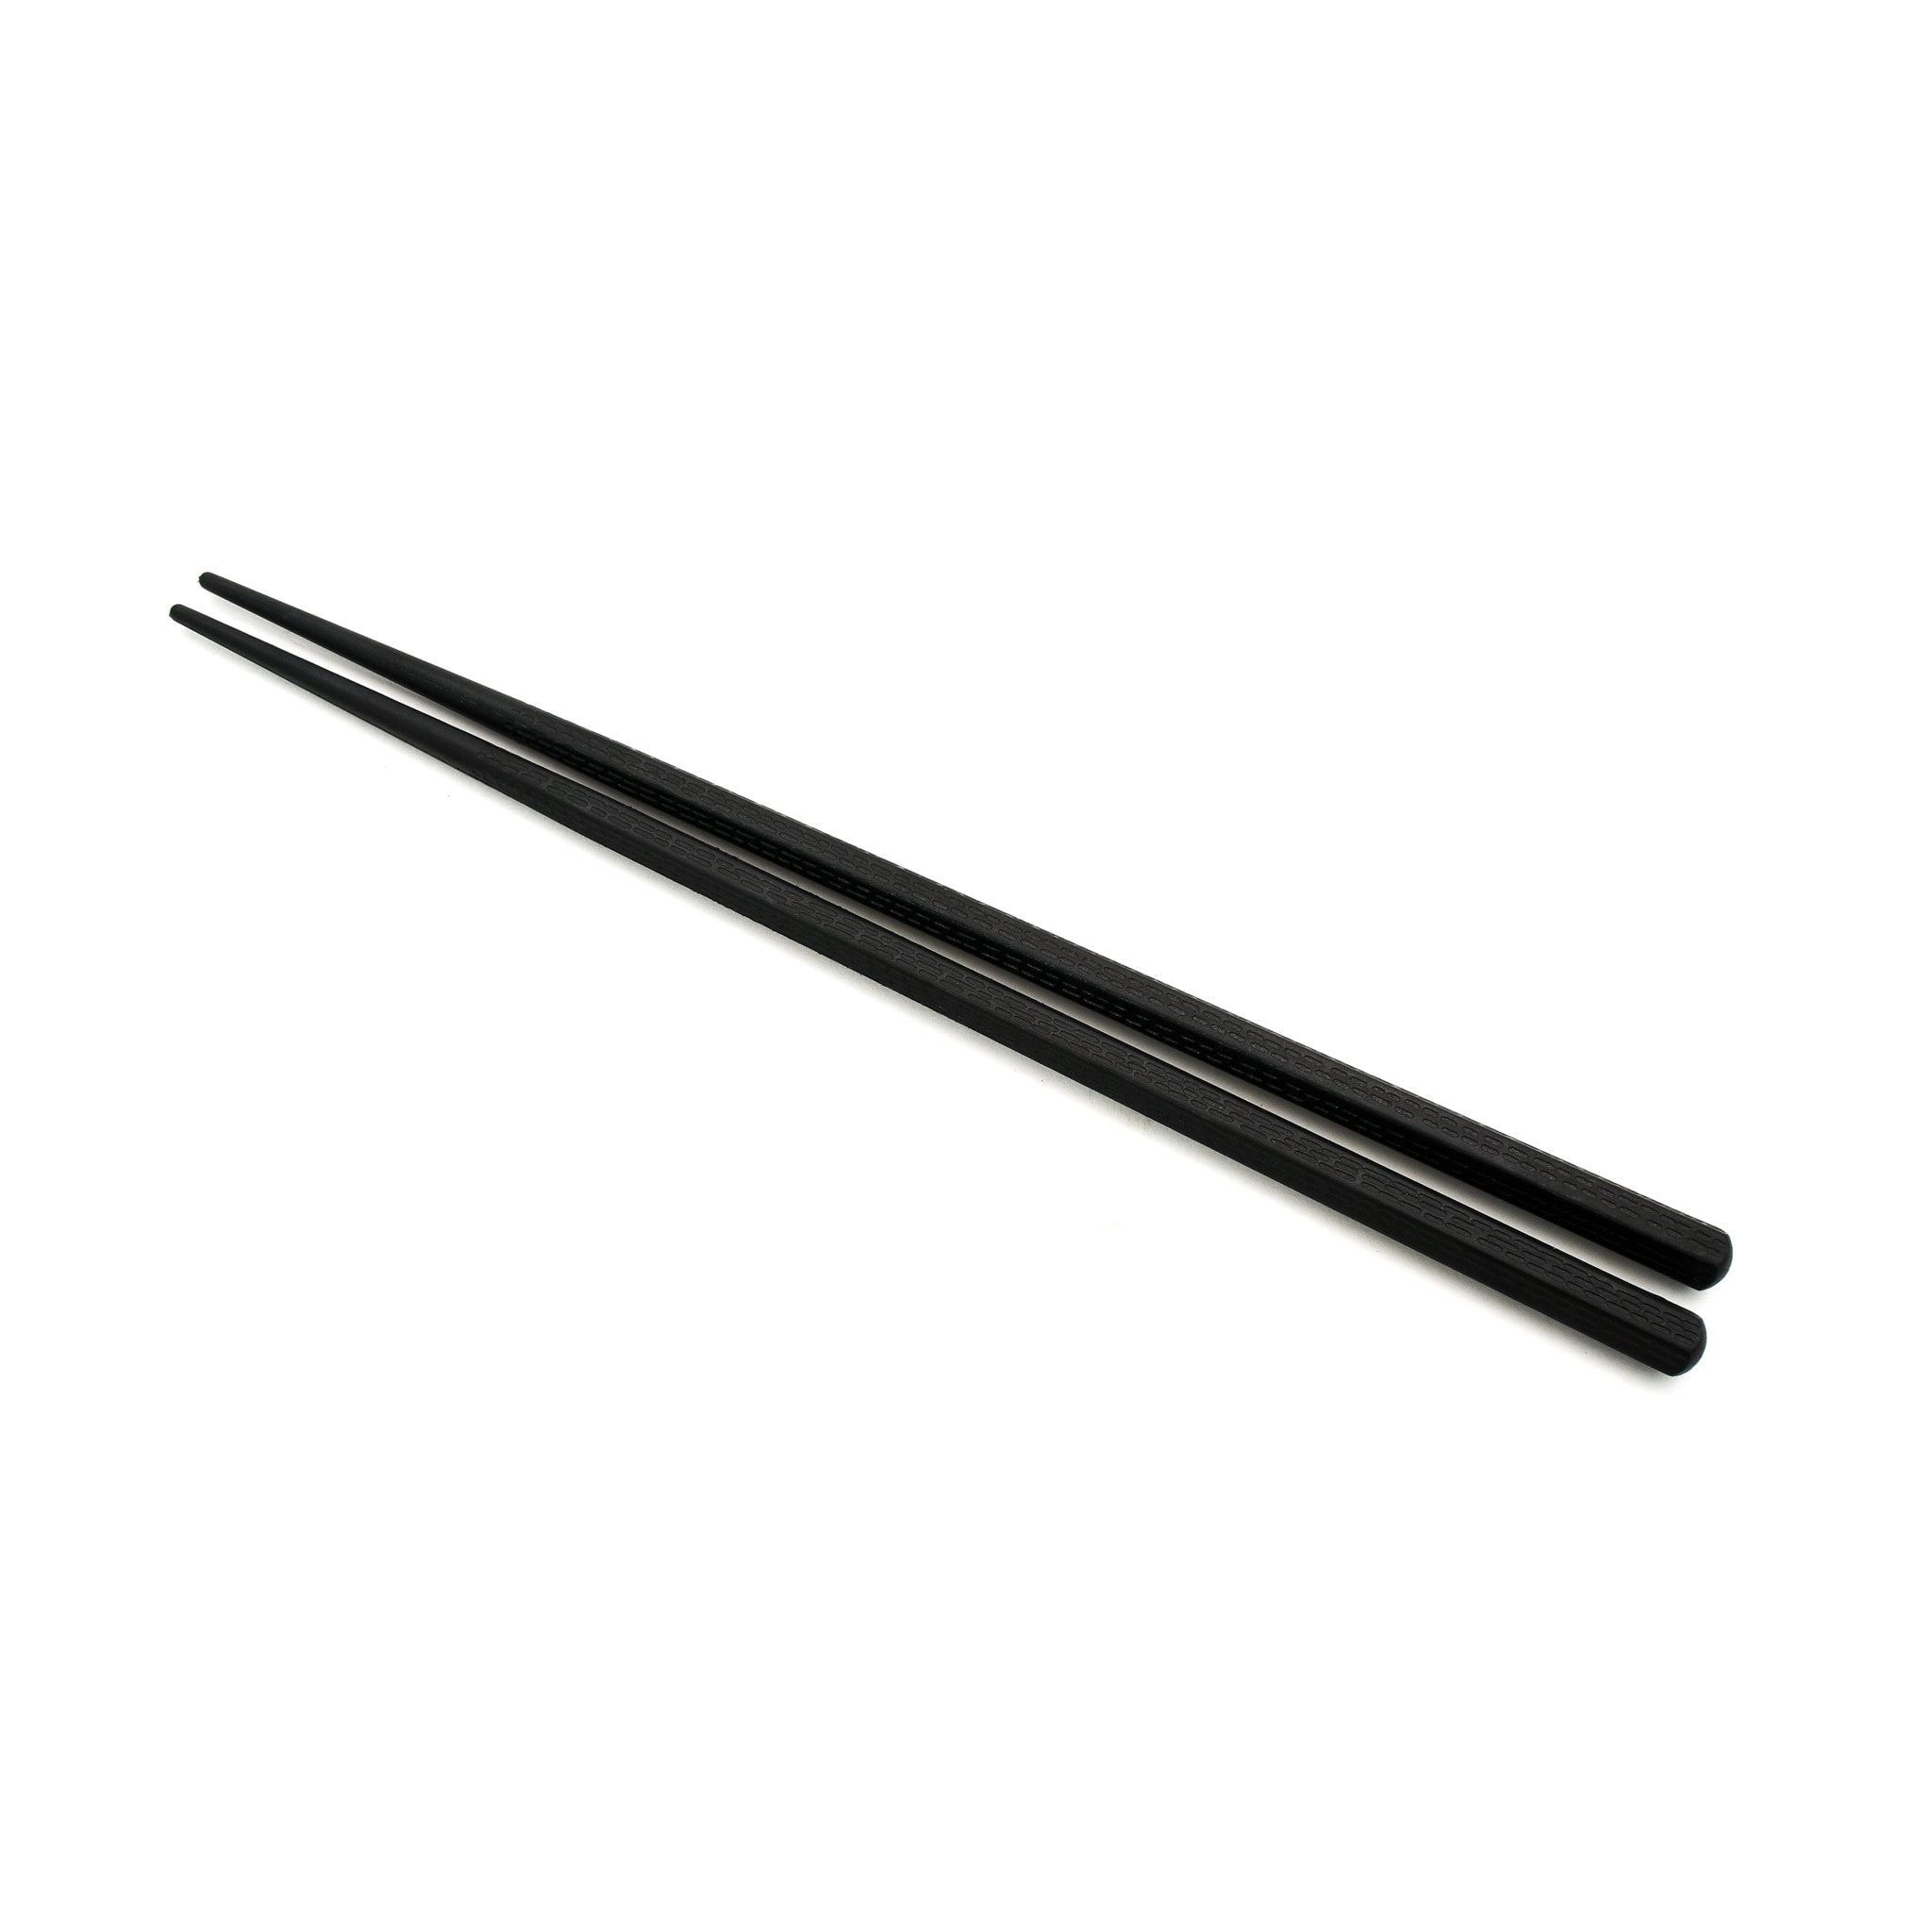 Black Fibreglass Japanese-style Chopsticks - 10 Pairs